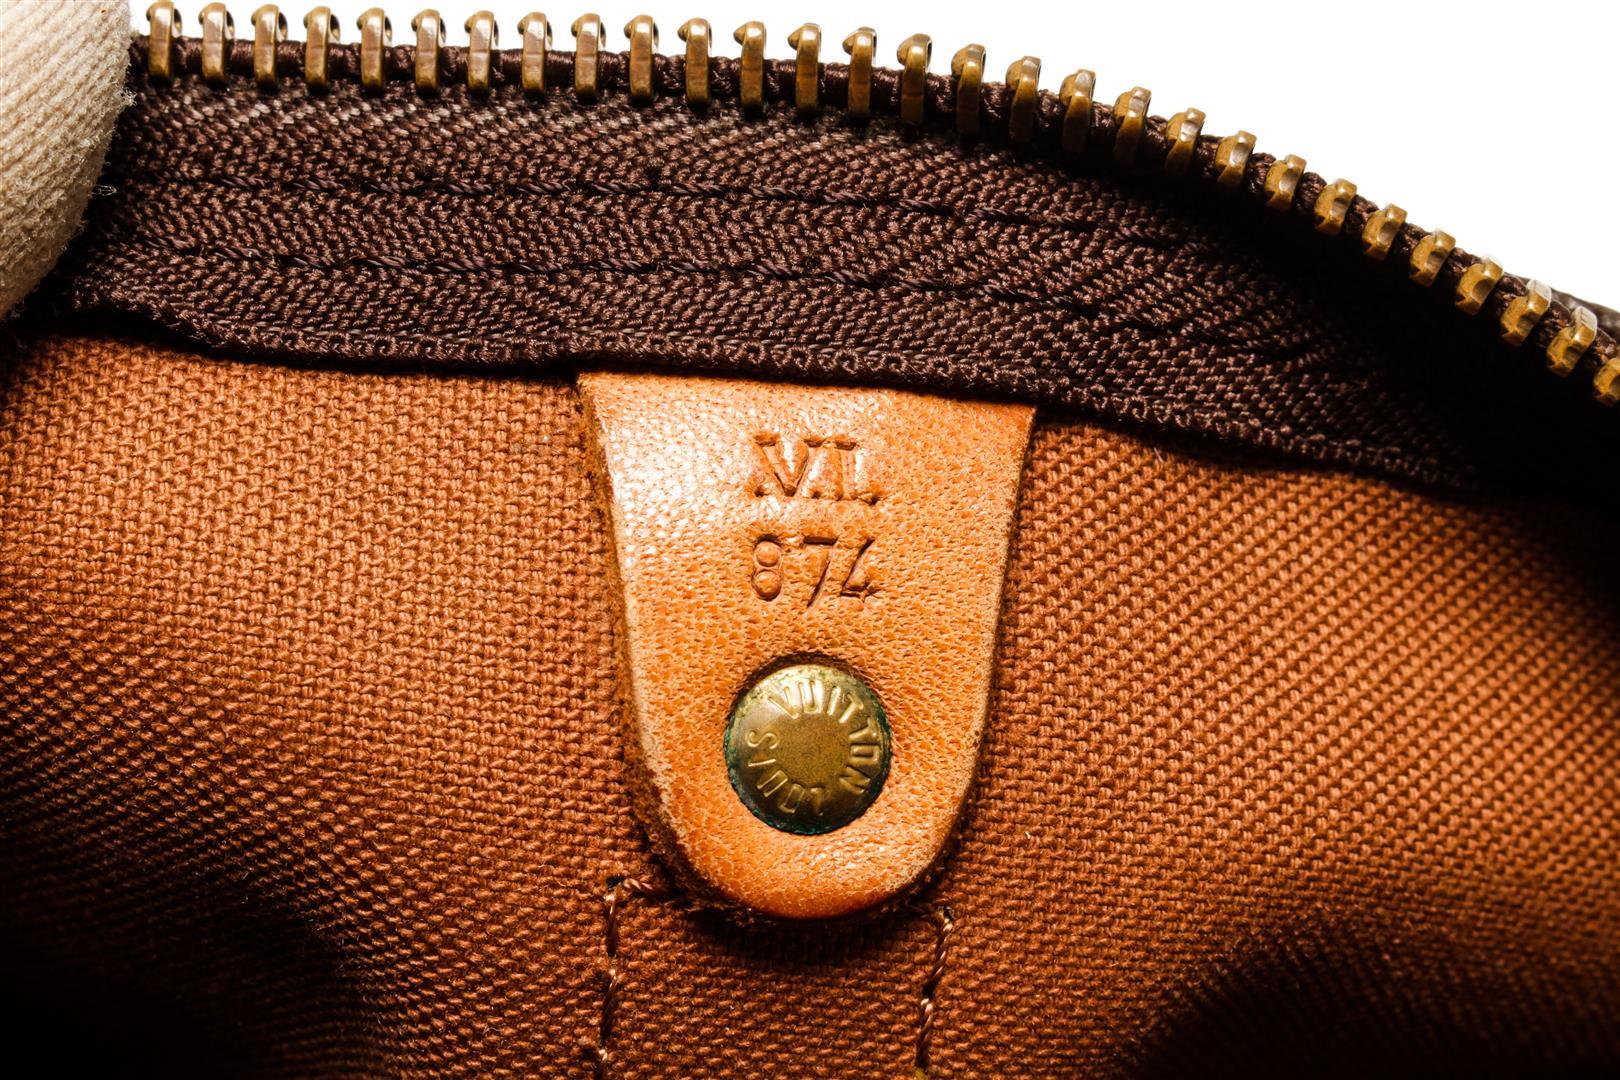 Louis Vuitton Keepall 55 cm Duffel Bag